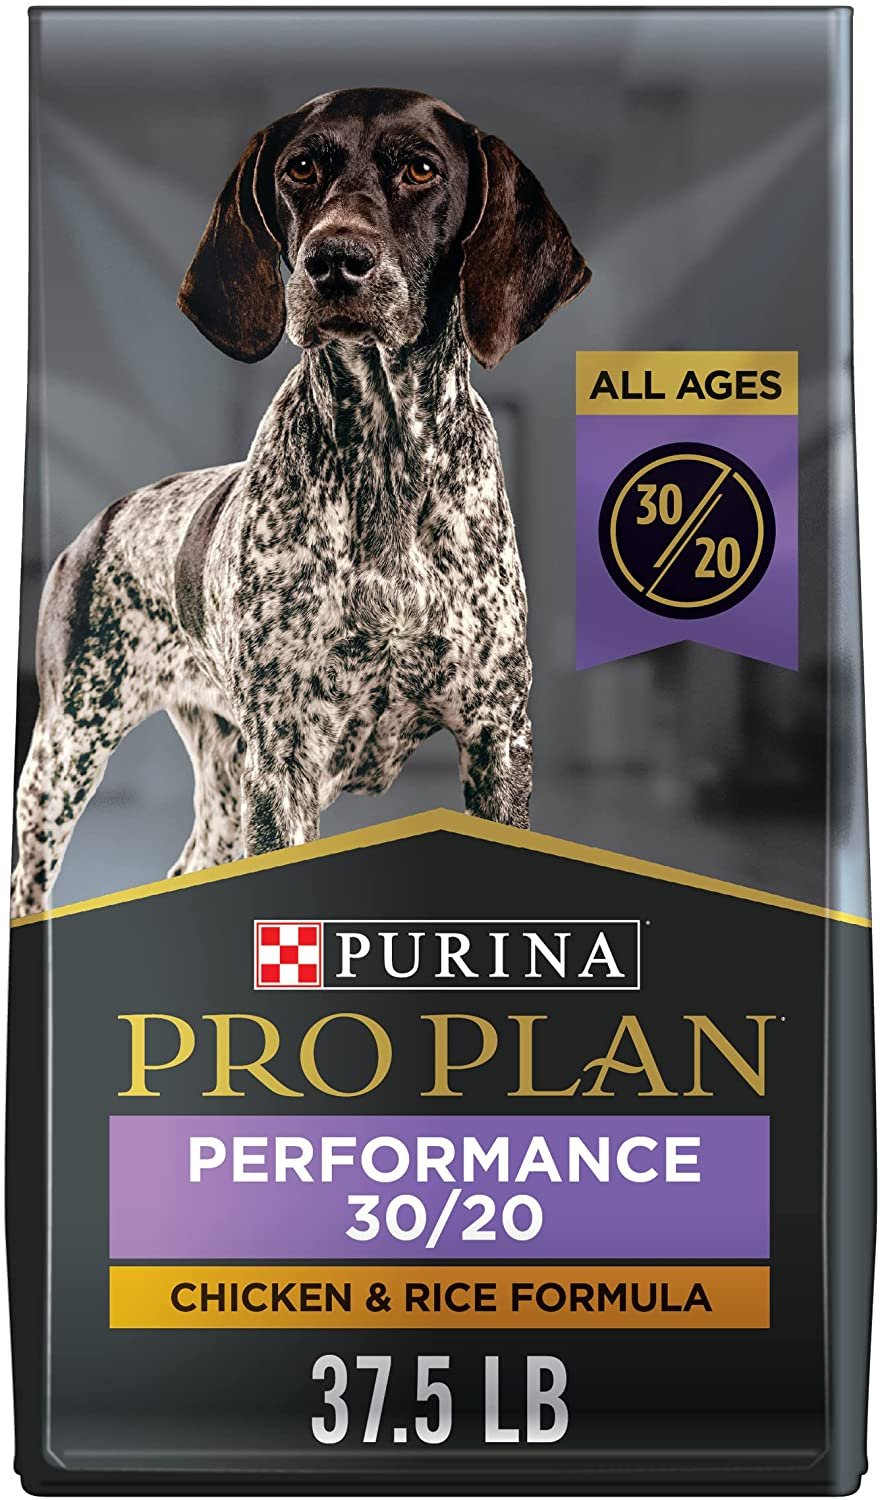 Purina Pro Plan SPORT Formula Dog Food